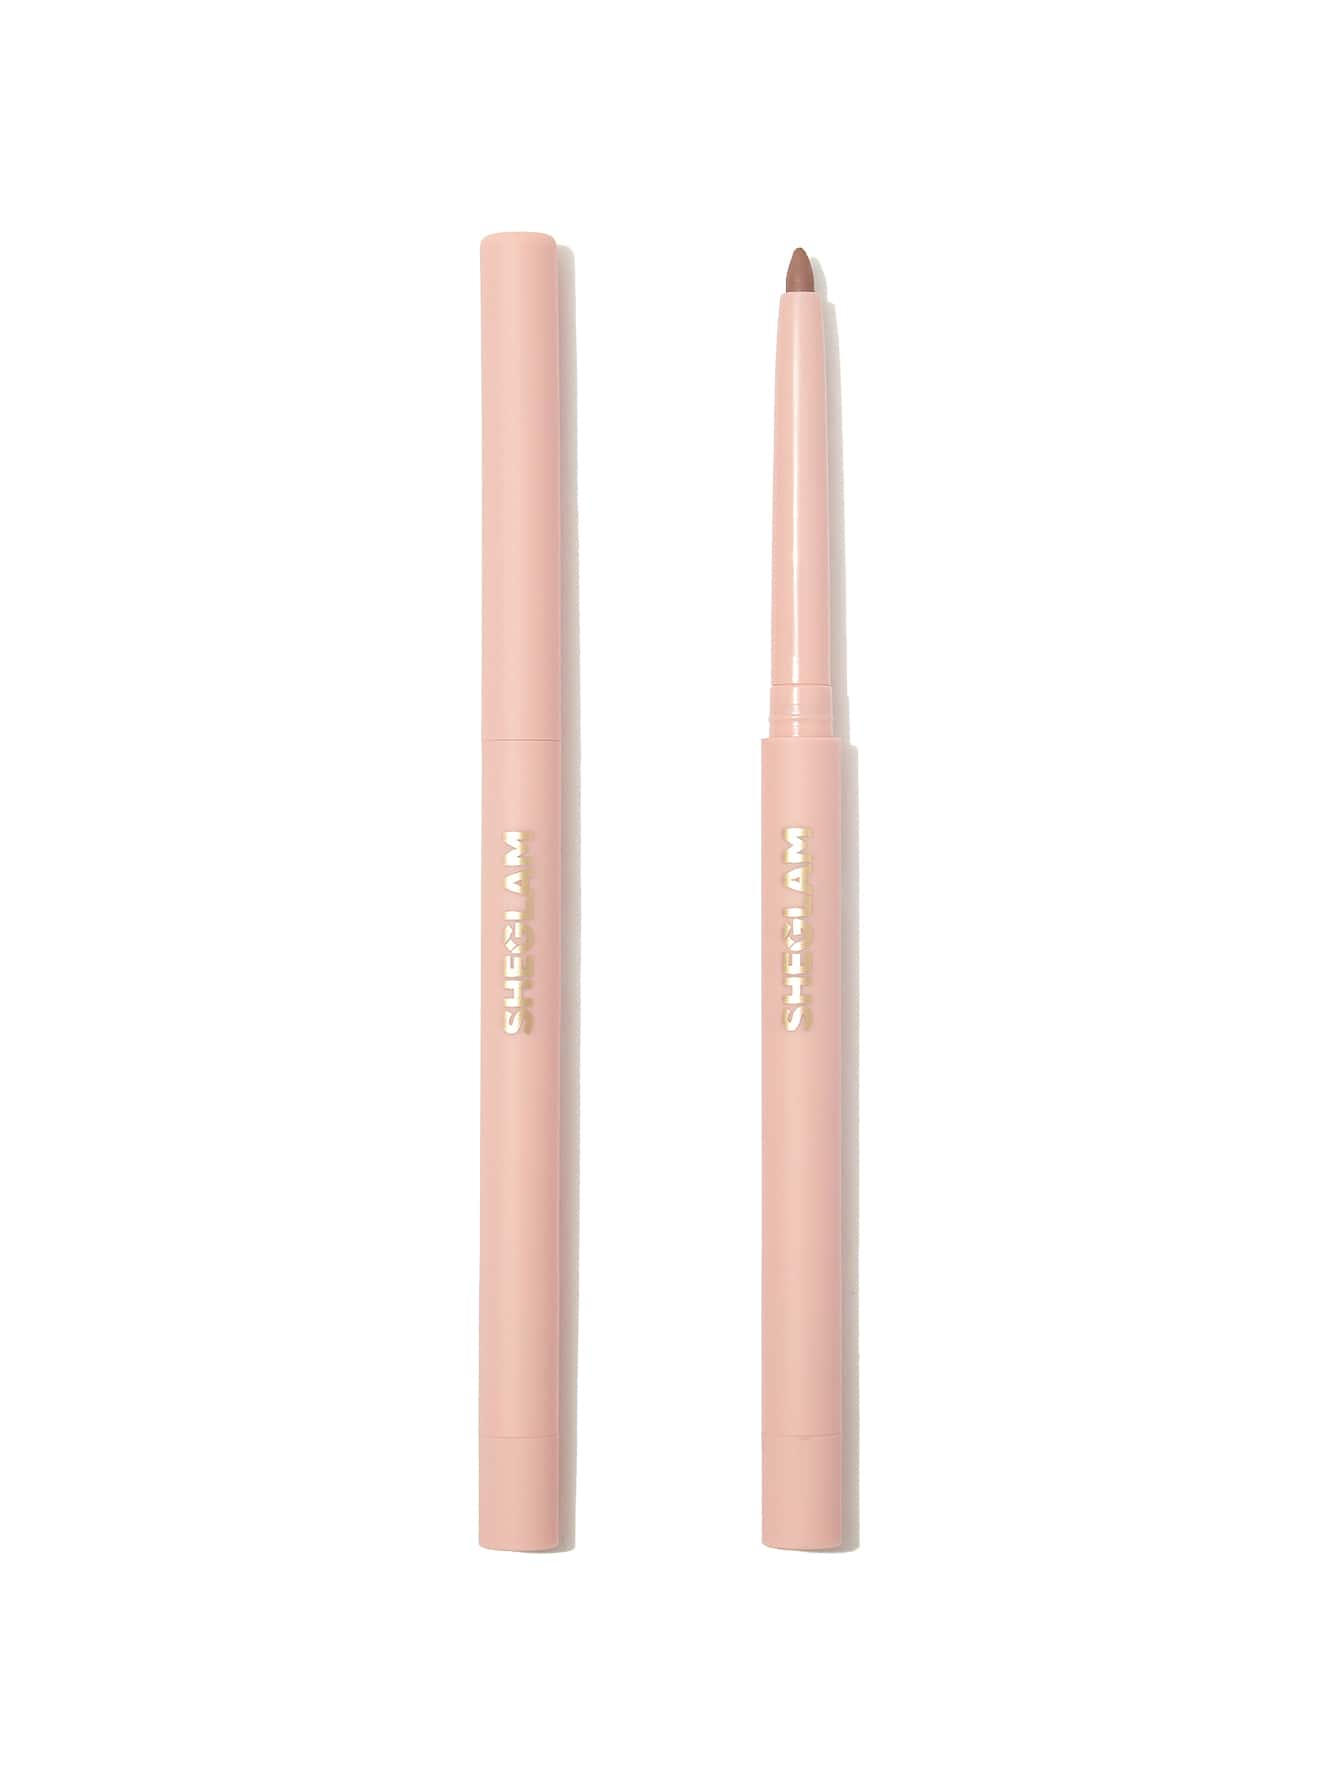 SHEGLAM So Lippy Lip Liner-Concrete Jungle Creamy Matte Lip Liner Pencil High Pigment Not Easy to Fade Silky Smooth Matte Contour Tint Lip Makeup